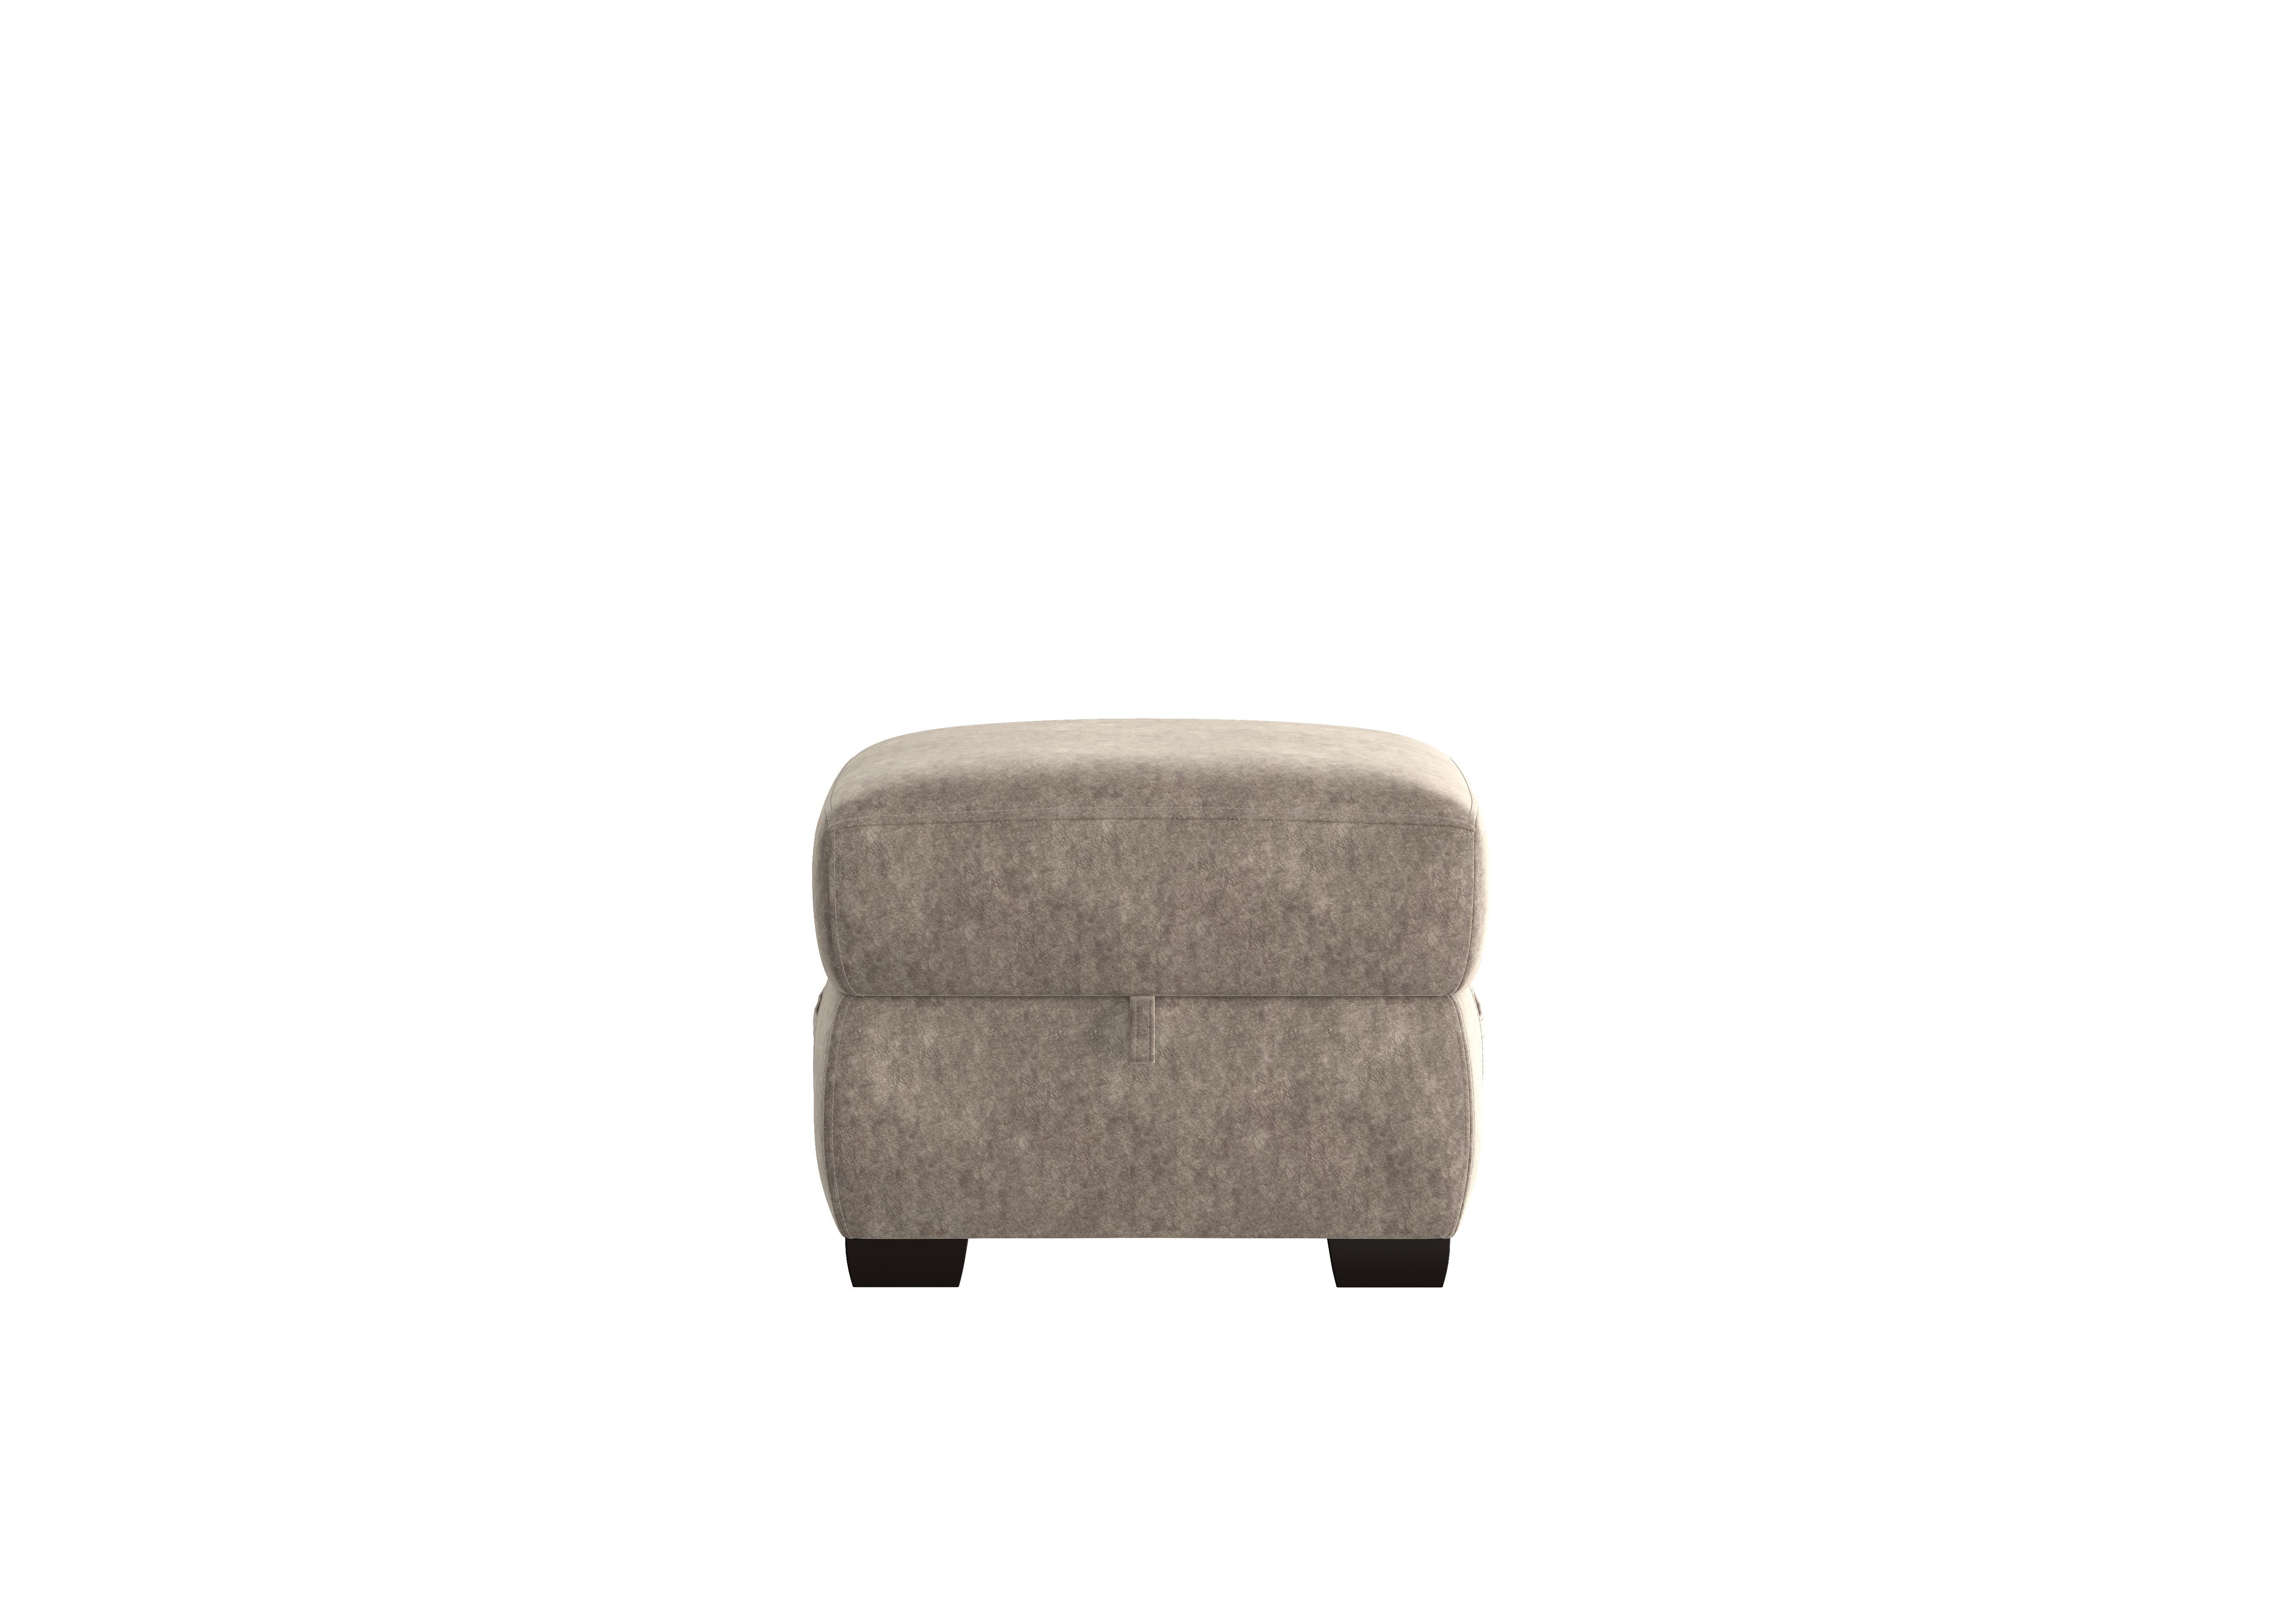 Starlight Express Fabric Storage Footstool in Bfa-Bnn-R29 Fv1 Mink on Furniture Village